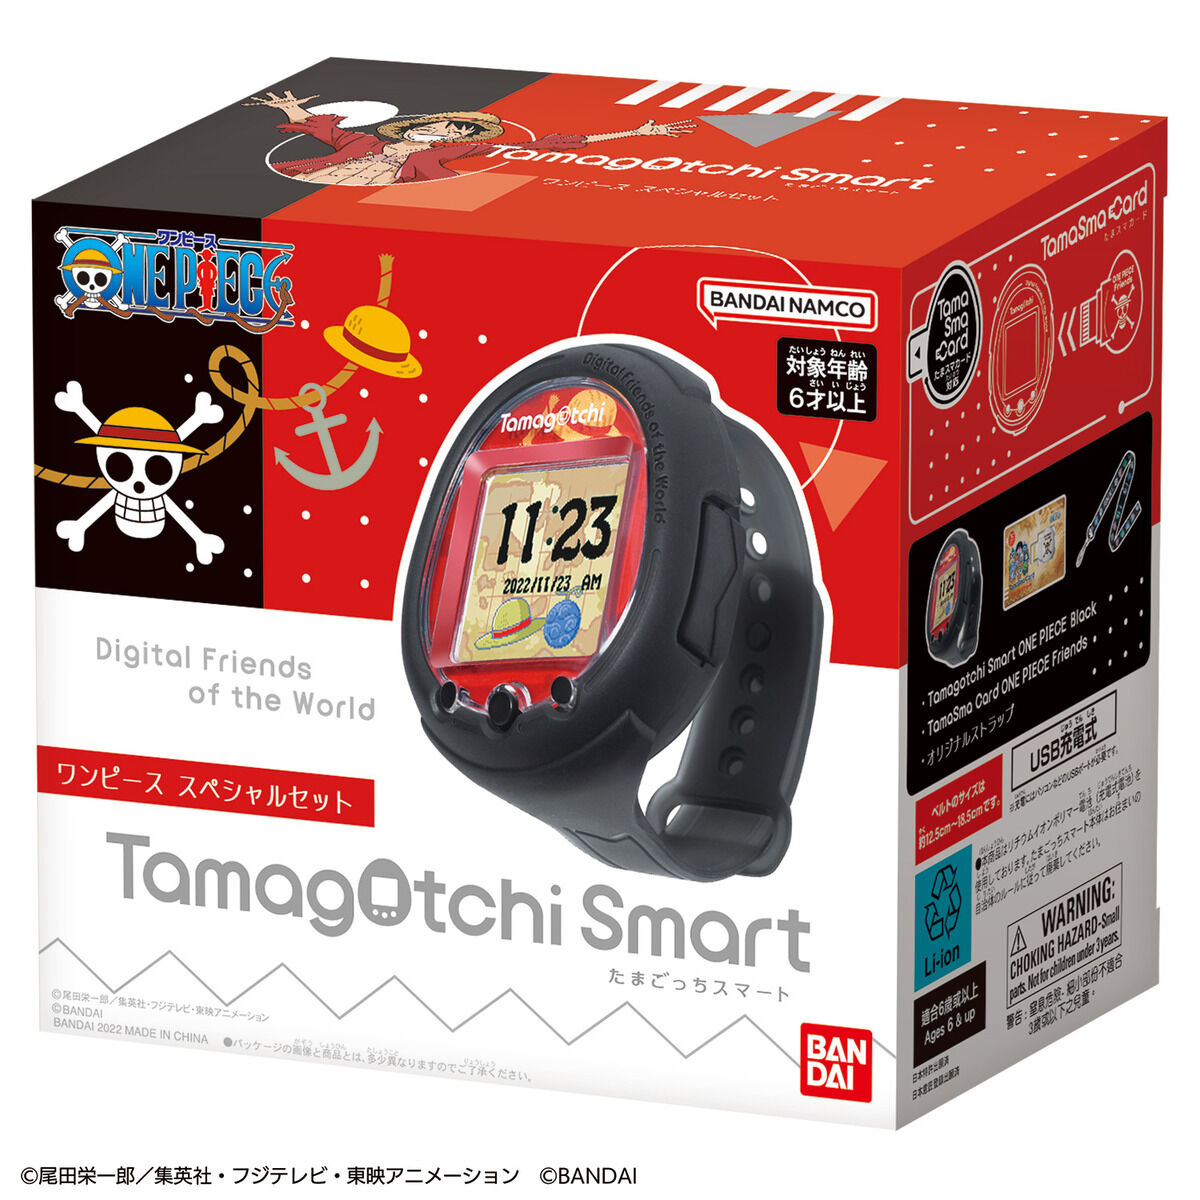 Tamagotchi Smart ワンピーススペシャルセット | Tamagotchi Smart